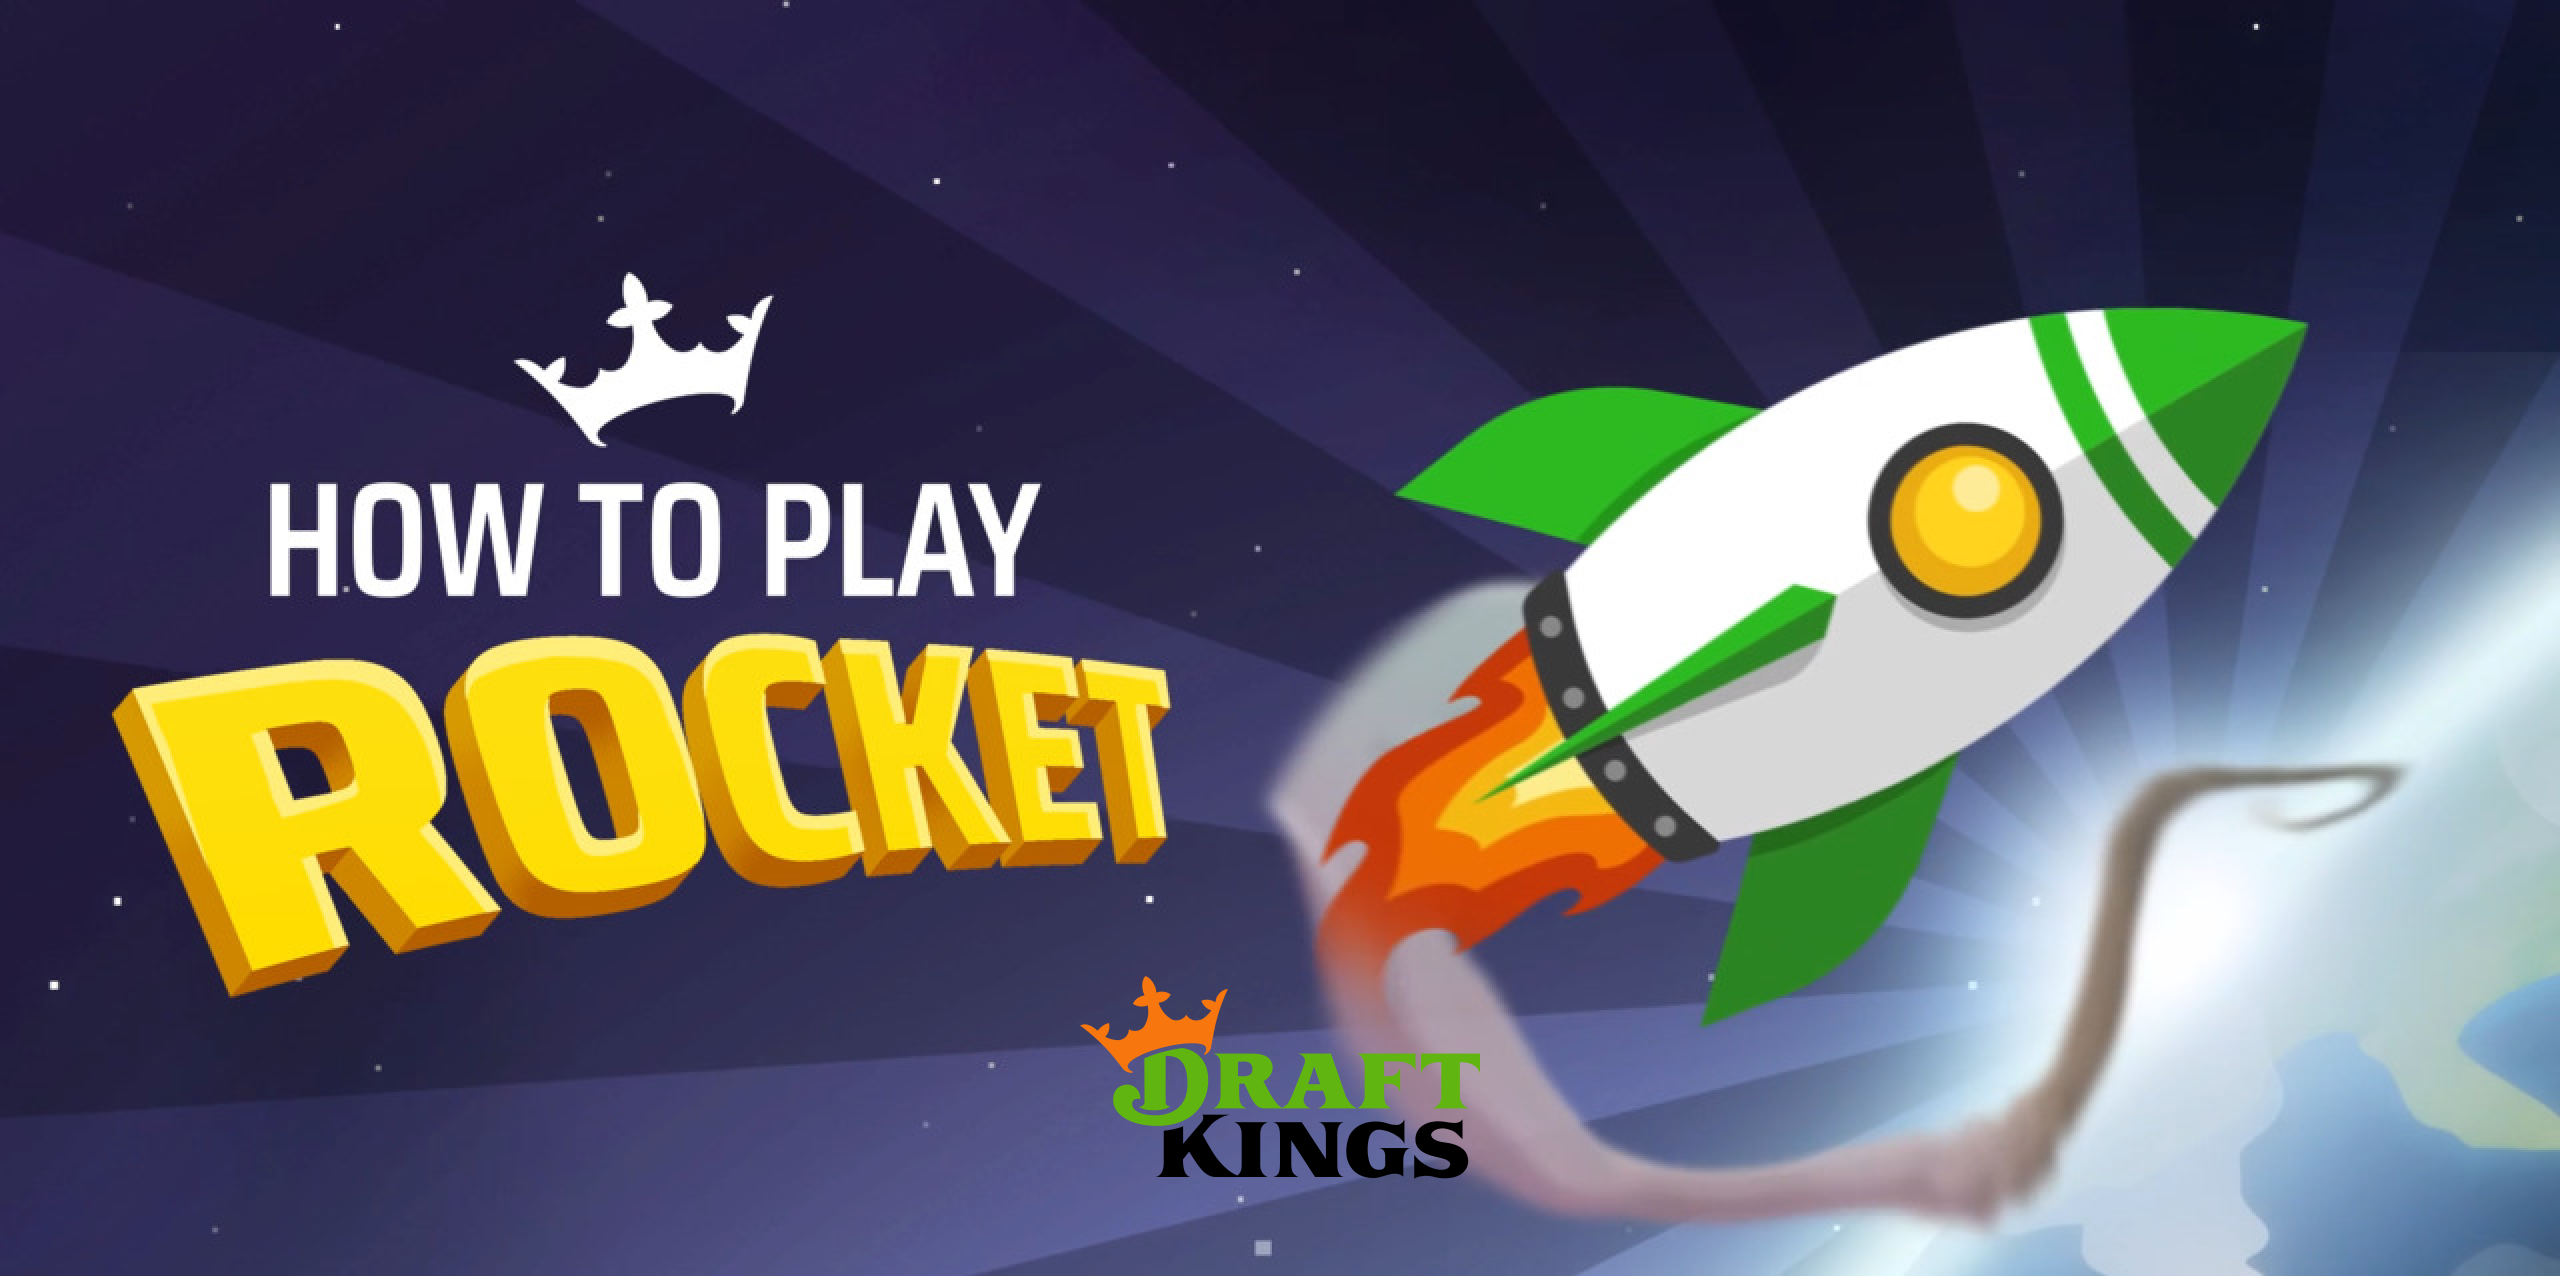 Draftkings Rocket by DraftKings Casino